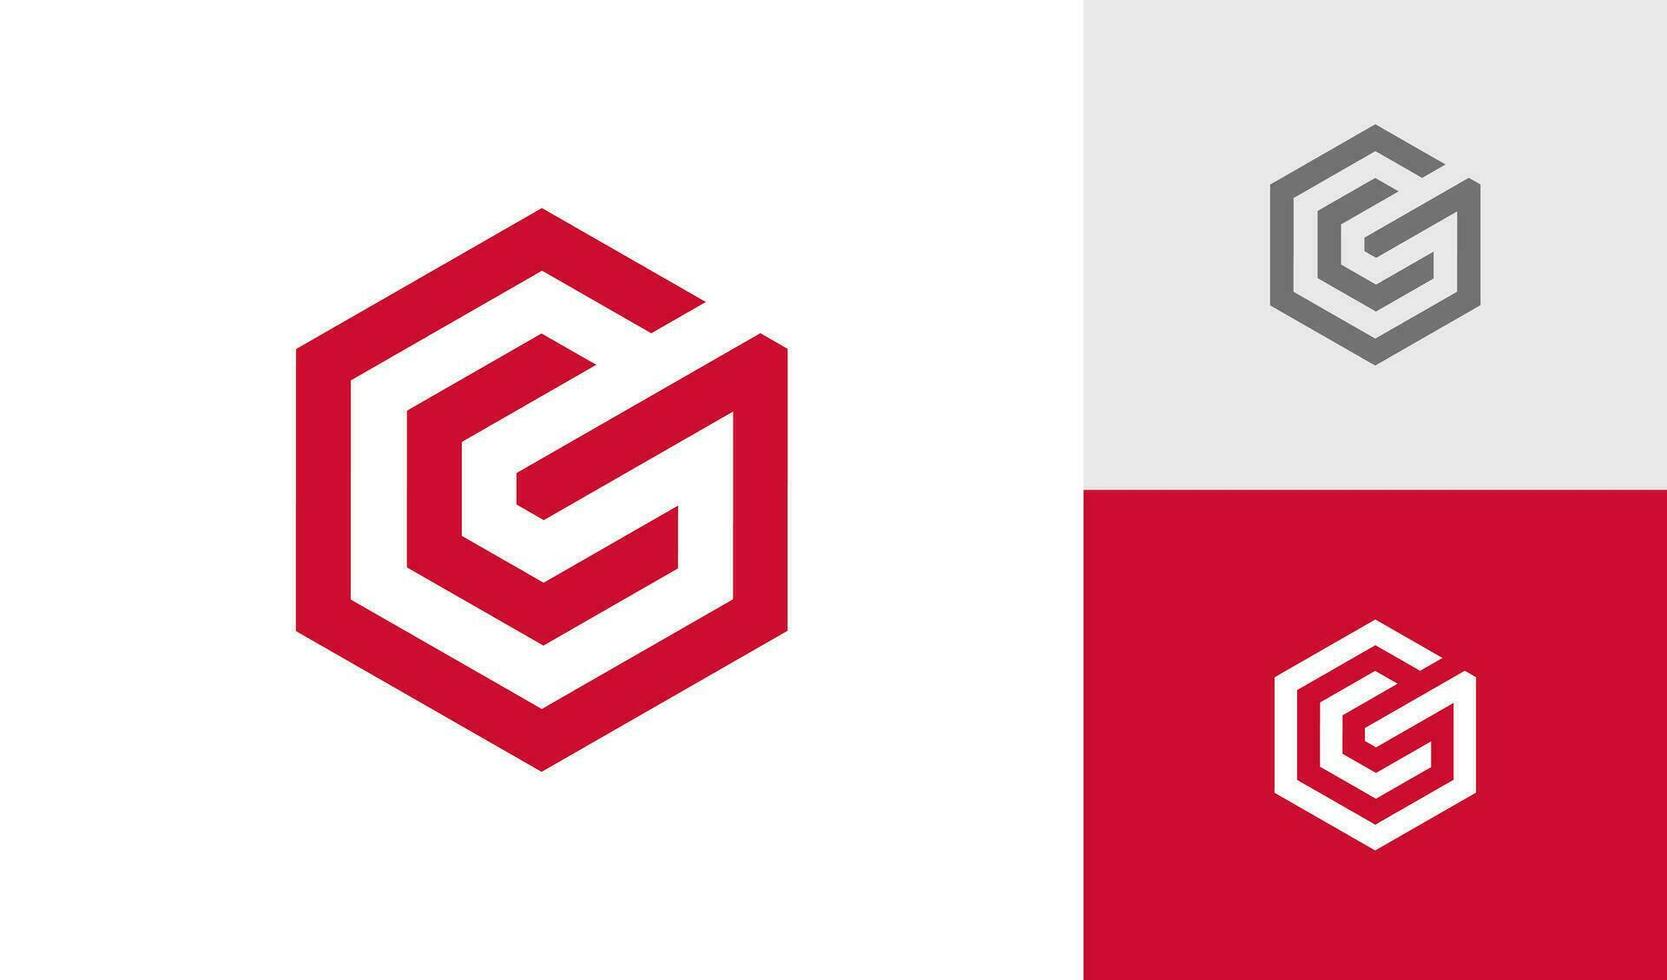 Letter GC initial hexagon monogram logo design vector